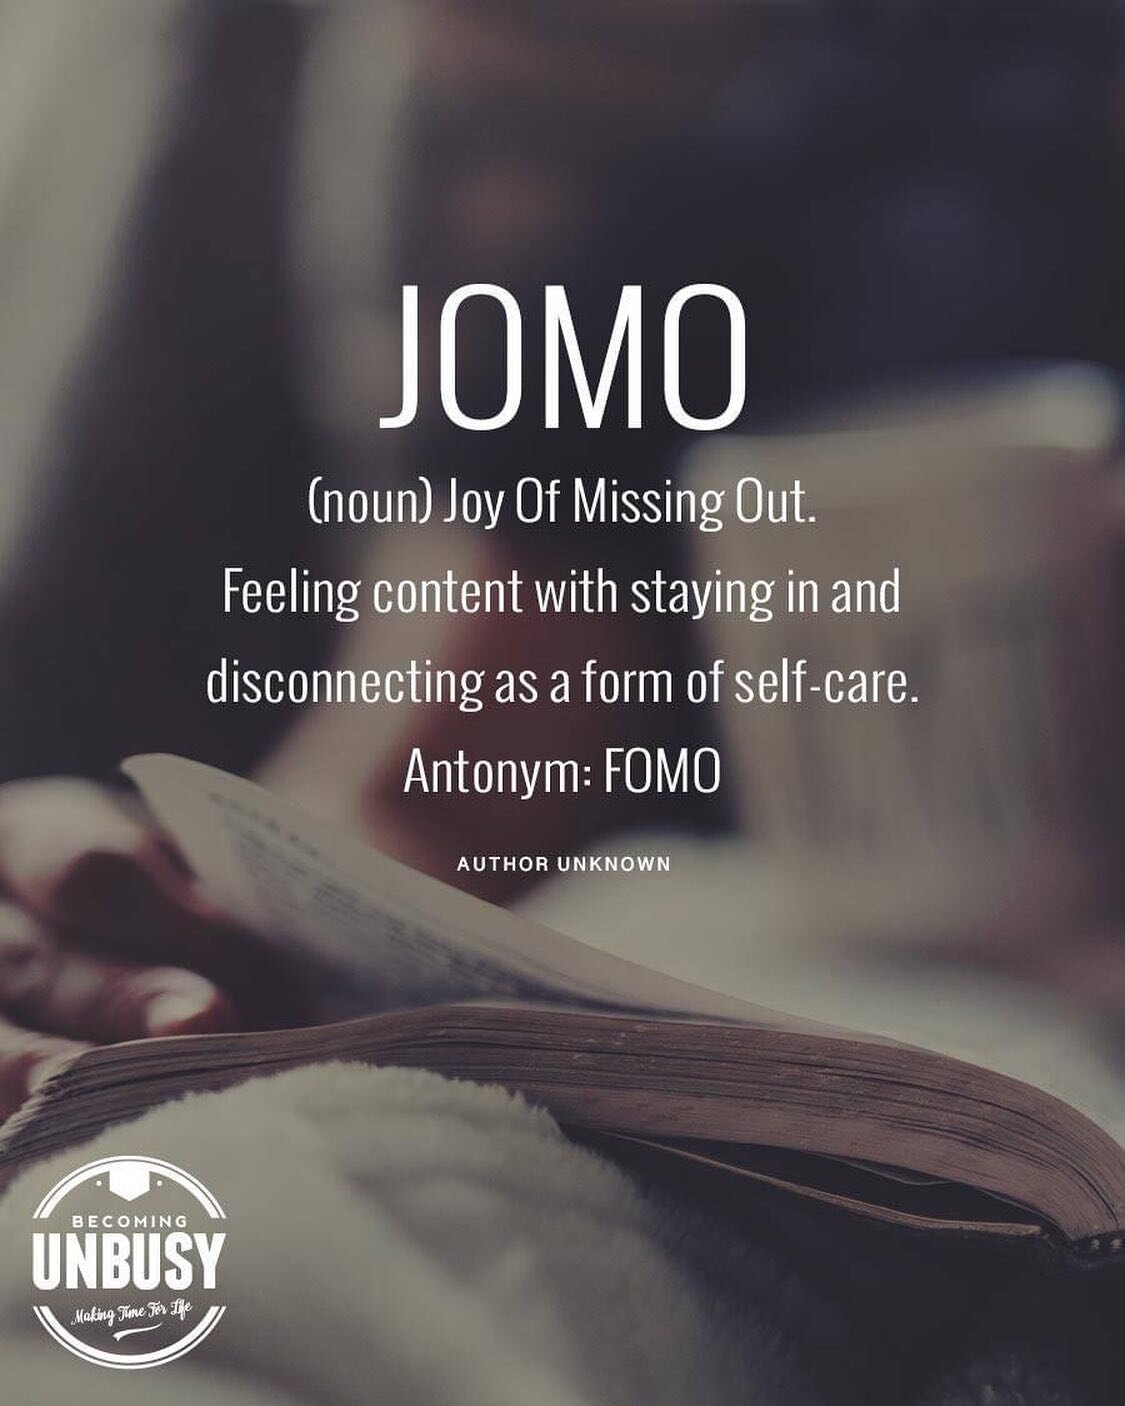 Drop a 🔥 if you have JOMO 

Original post by @becomingunbusy 

#jomo #jomovsfomo #joy #areyoureallymissingout #balance #takeabreak #findingjoy #slowdown #busyness #anxiety